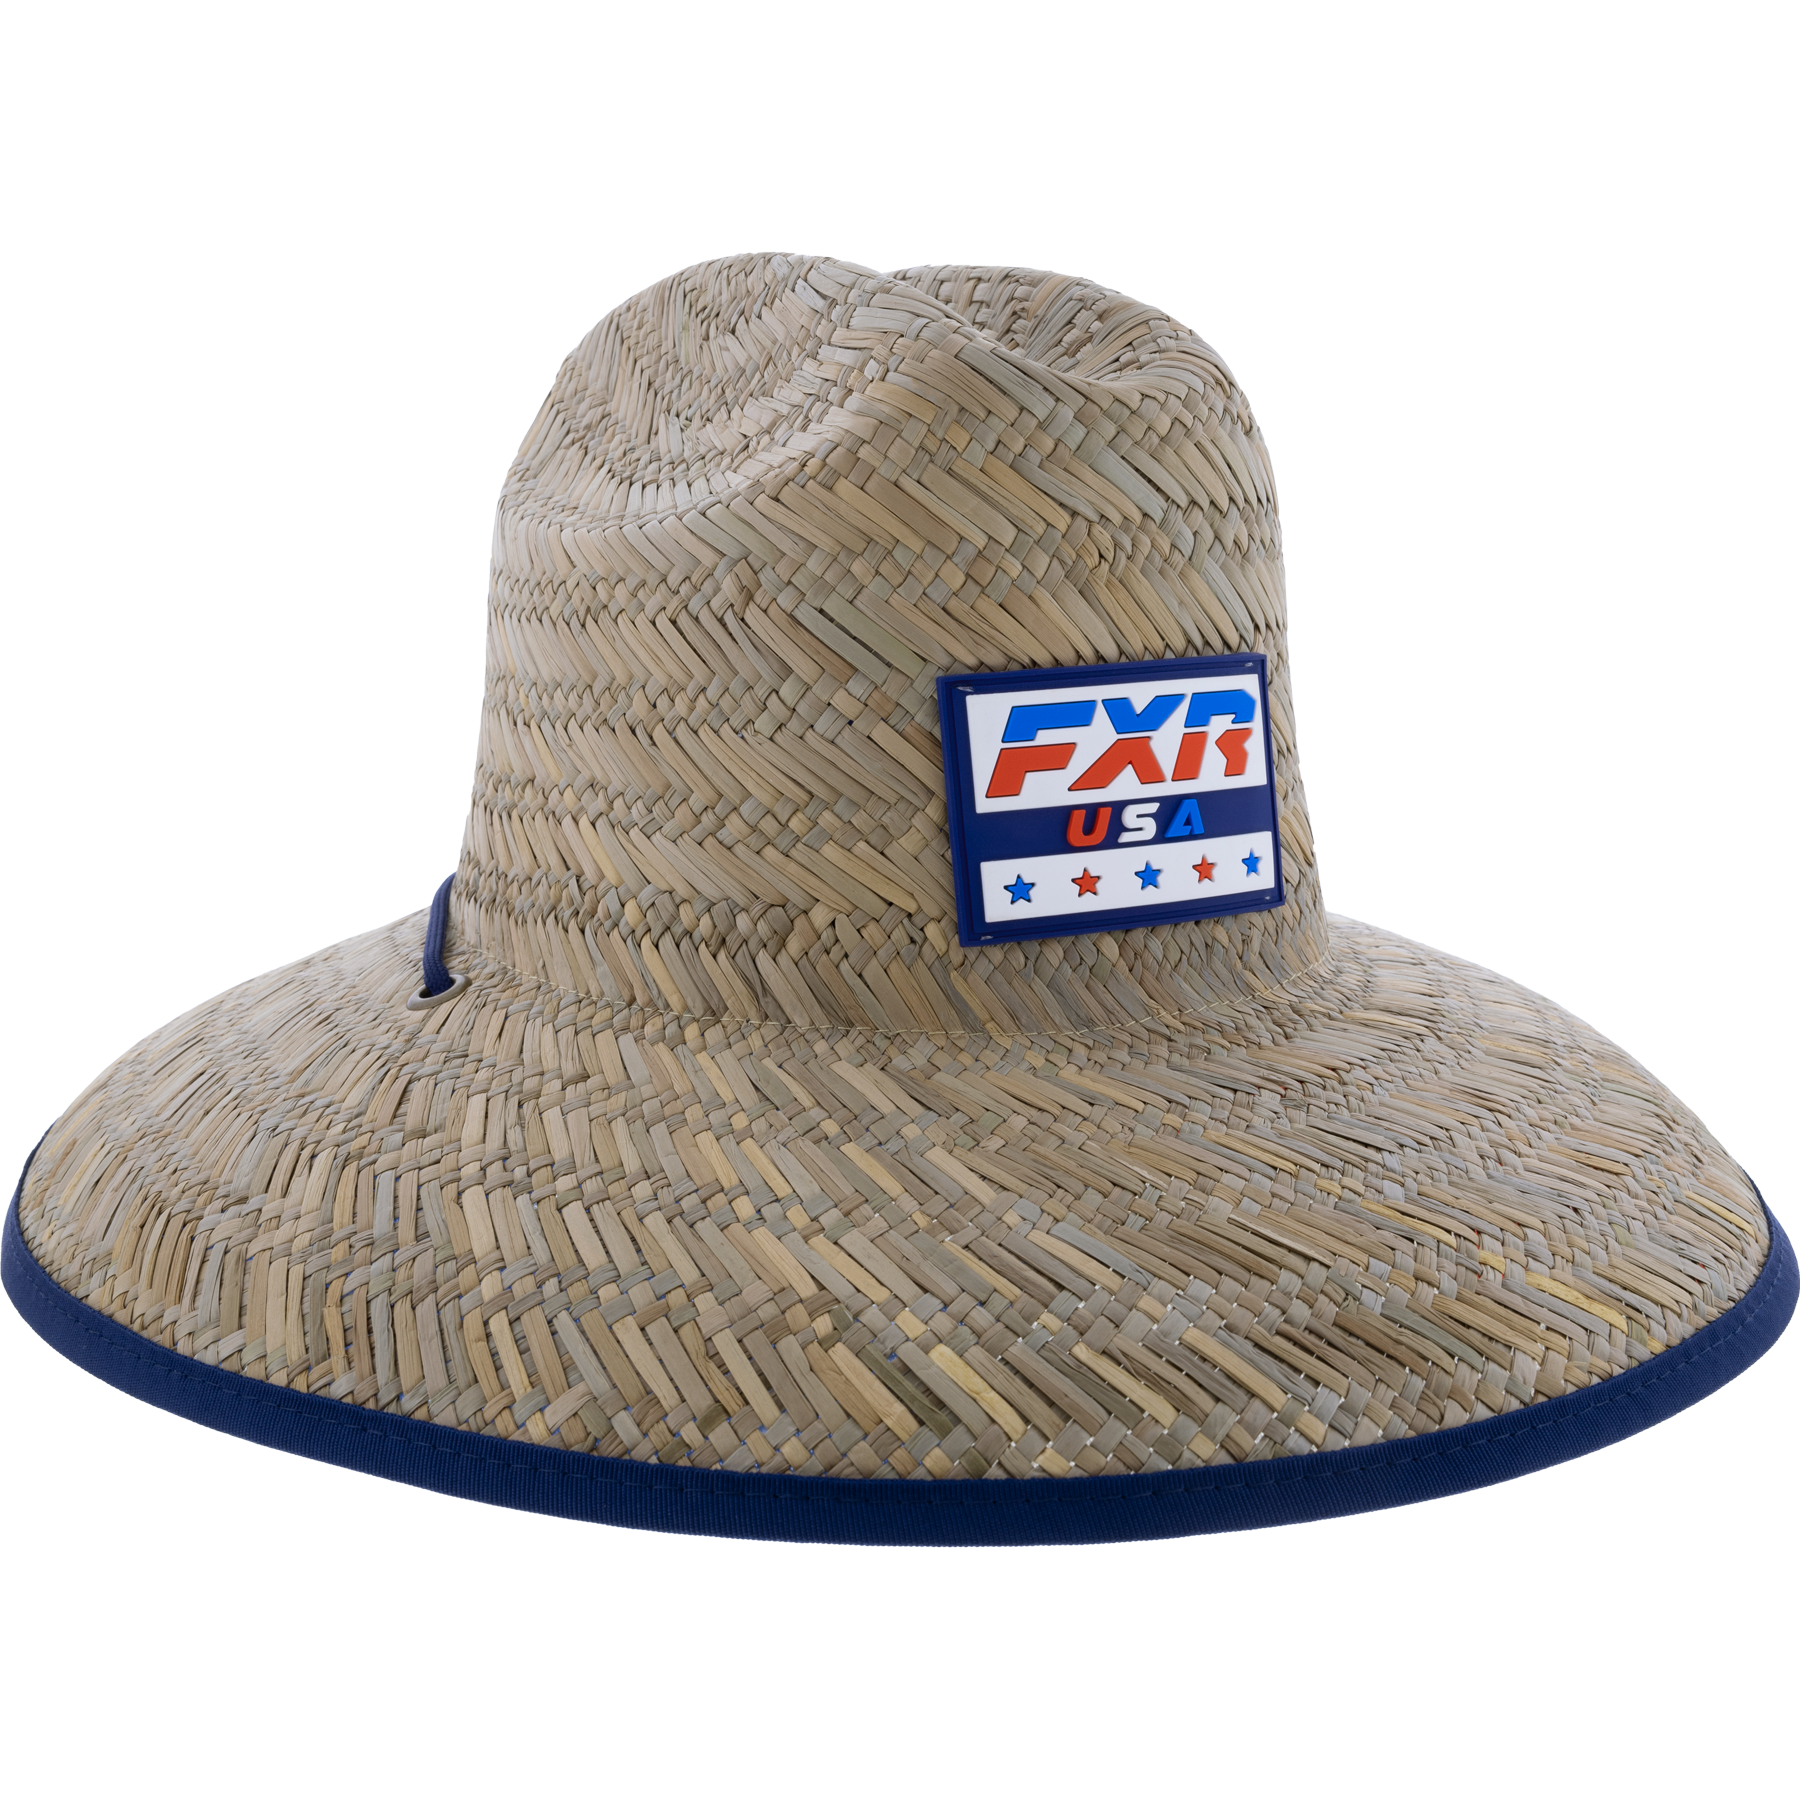 FXR Shoreside YOUTH Straw Hat USA